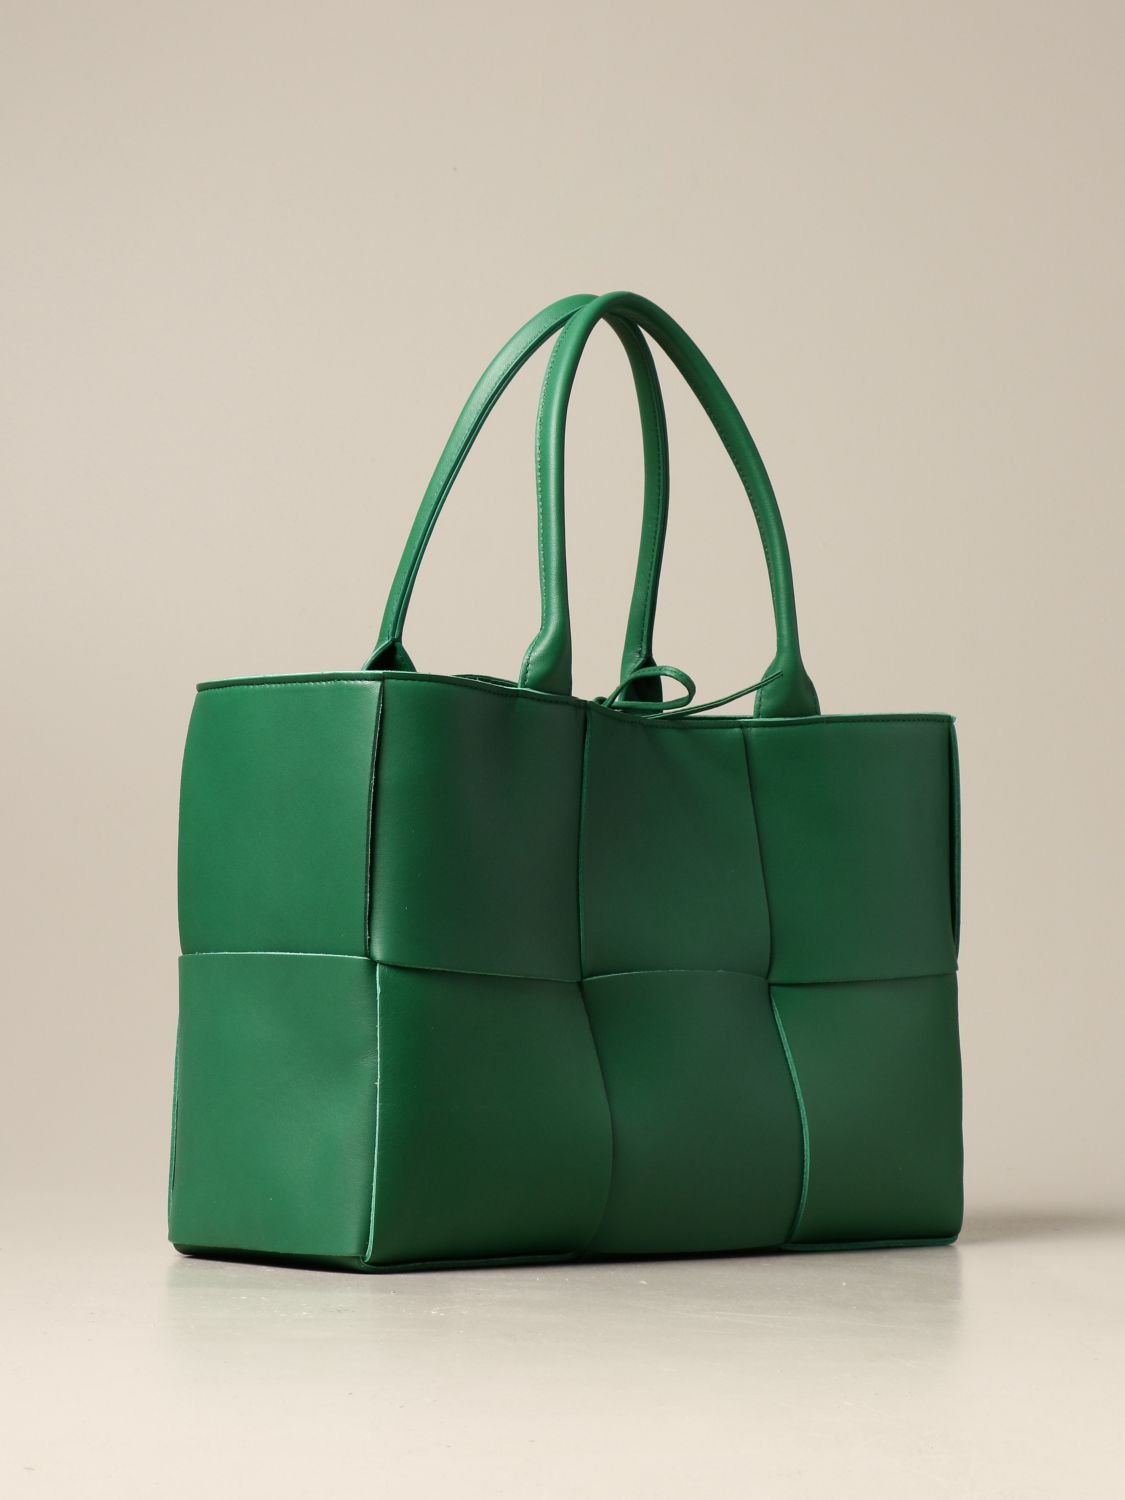 BOTTEGA VENETA: Arco bag in woven nappa - Green  Bottega Veneta handbag  609175 VMAY5 online at